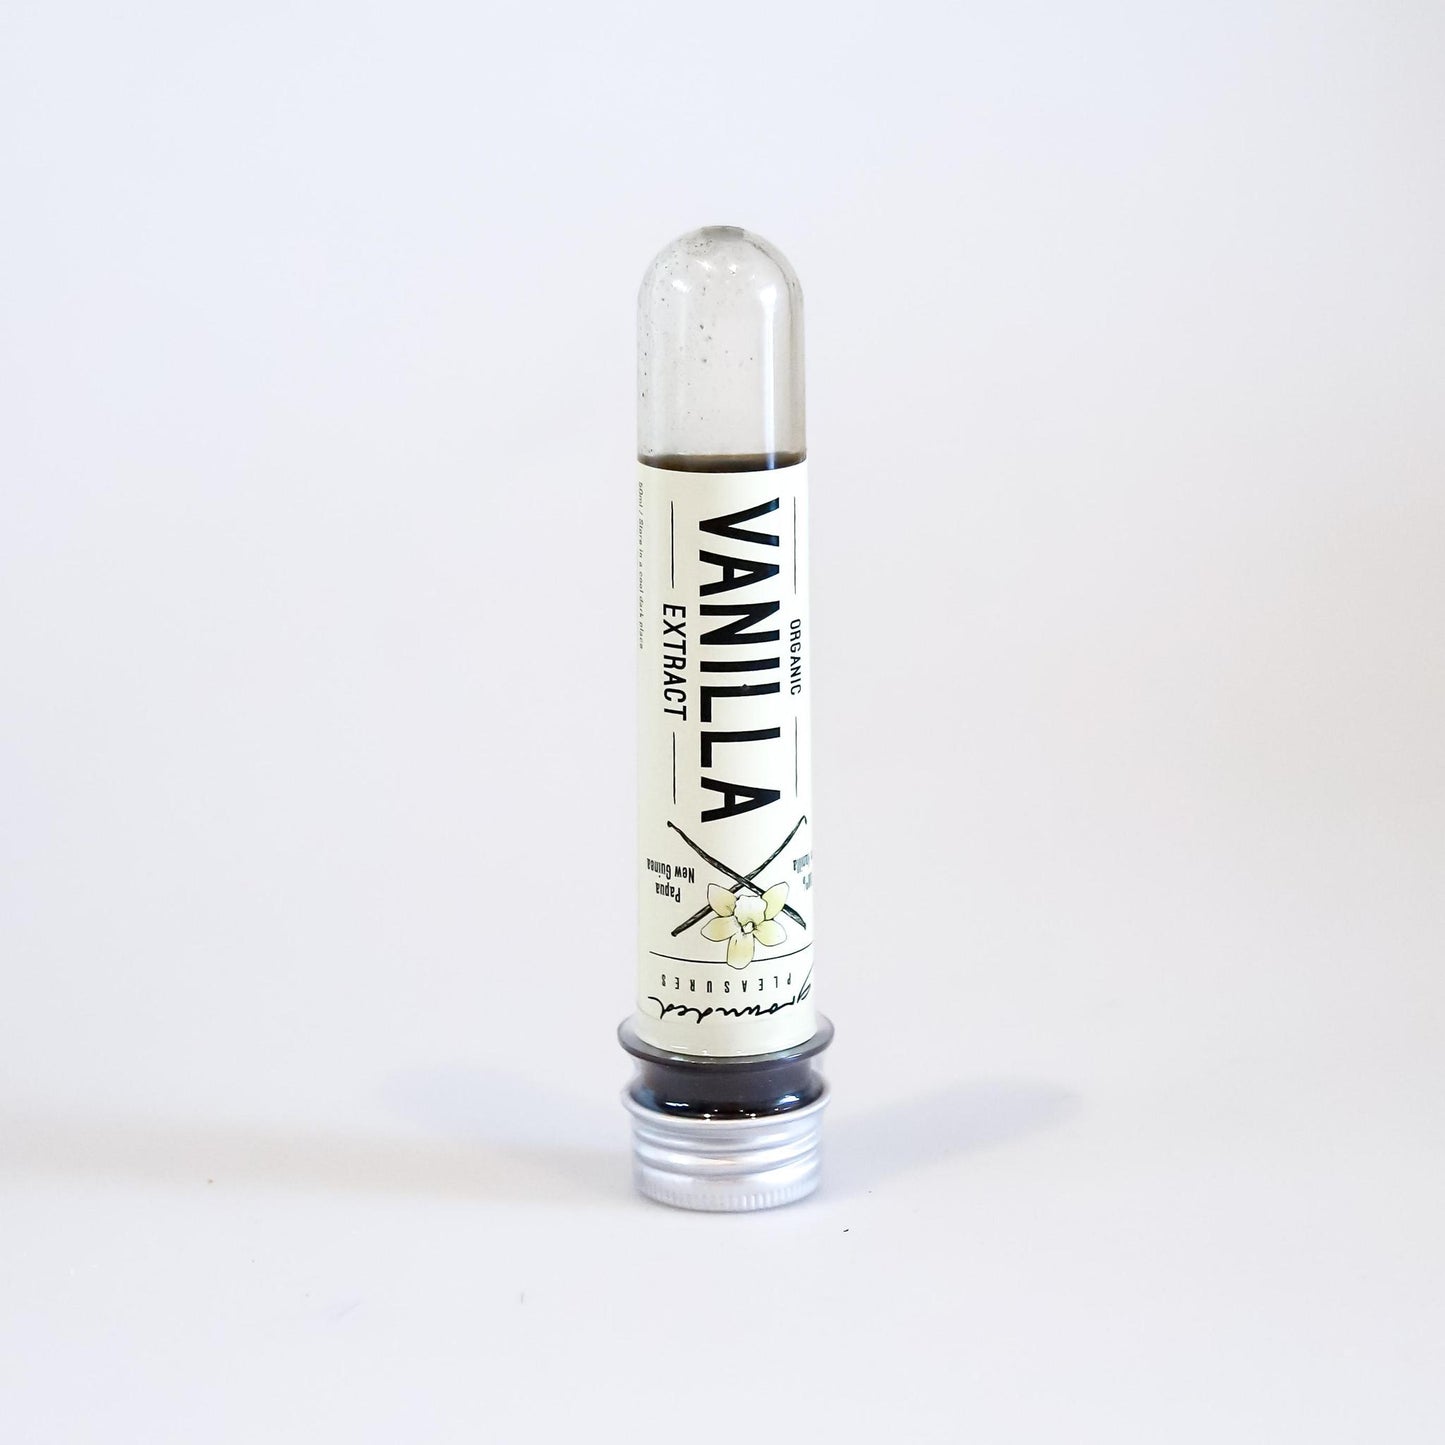 Organic Vanilla Extract